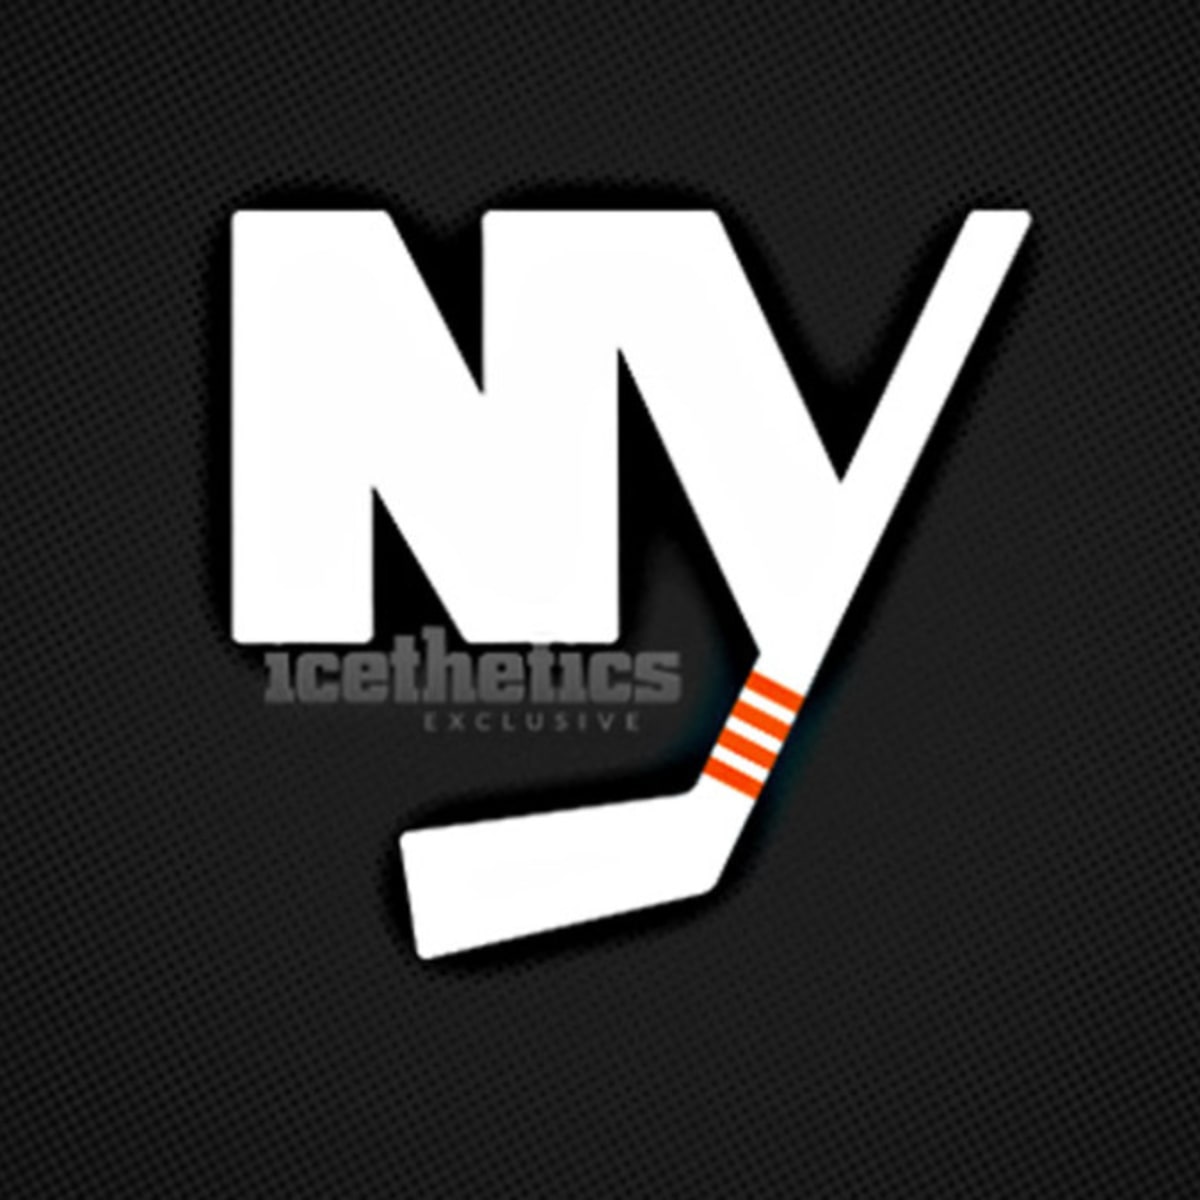 New York Islanders Dark Uniform History  New york islanders, Nhl uniform,  Word mark logo